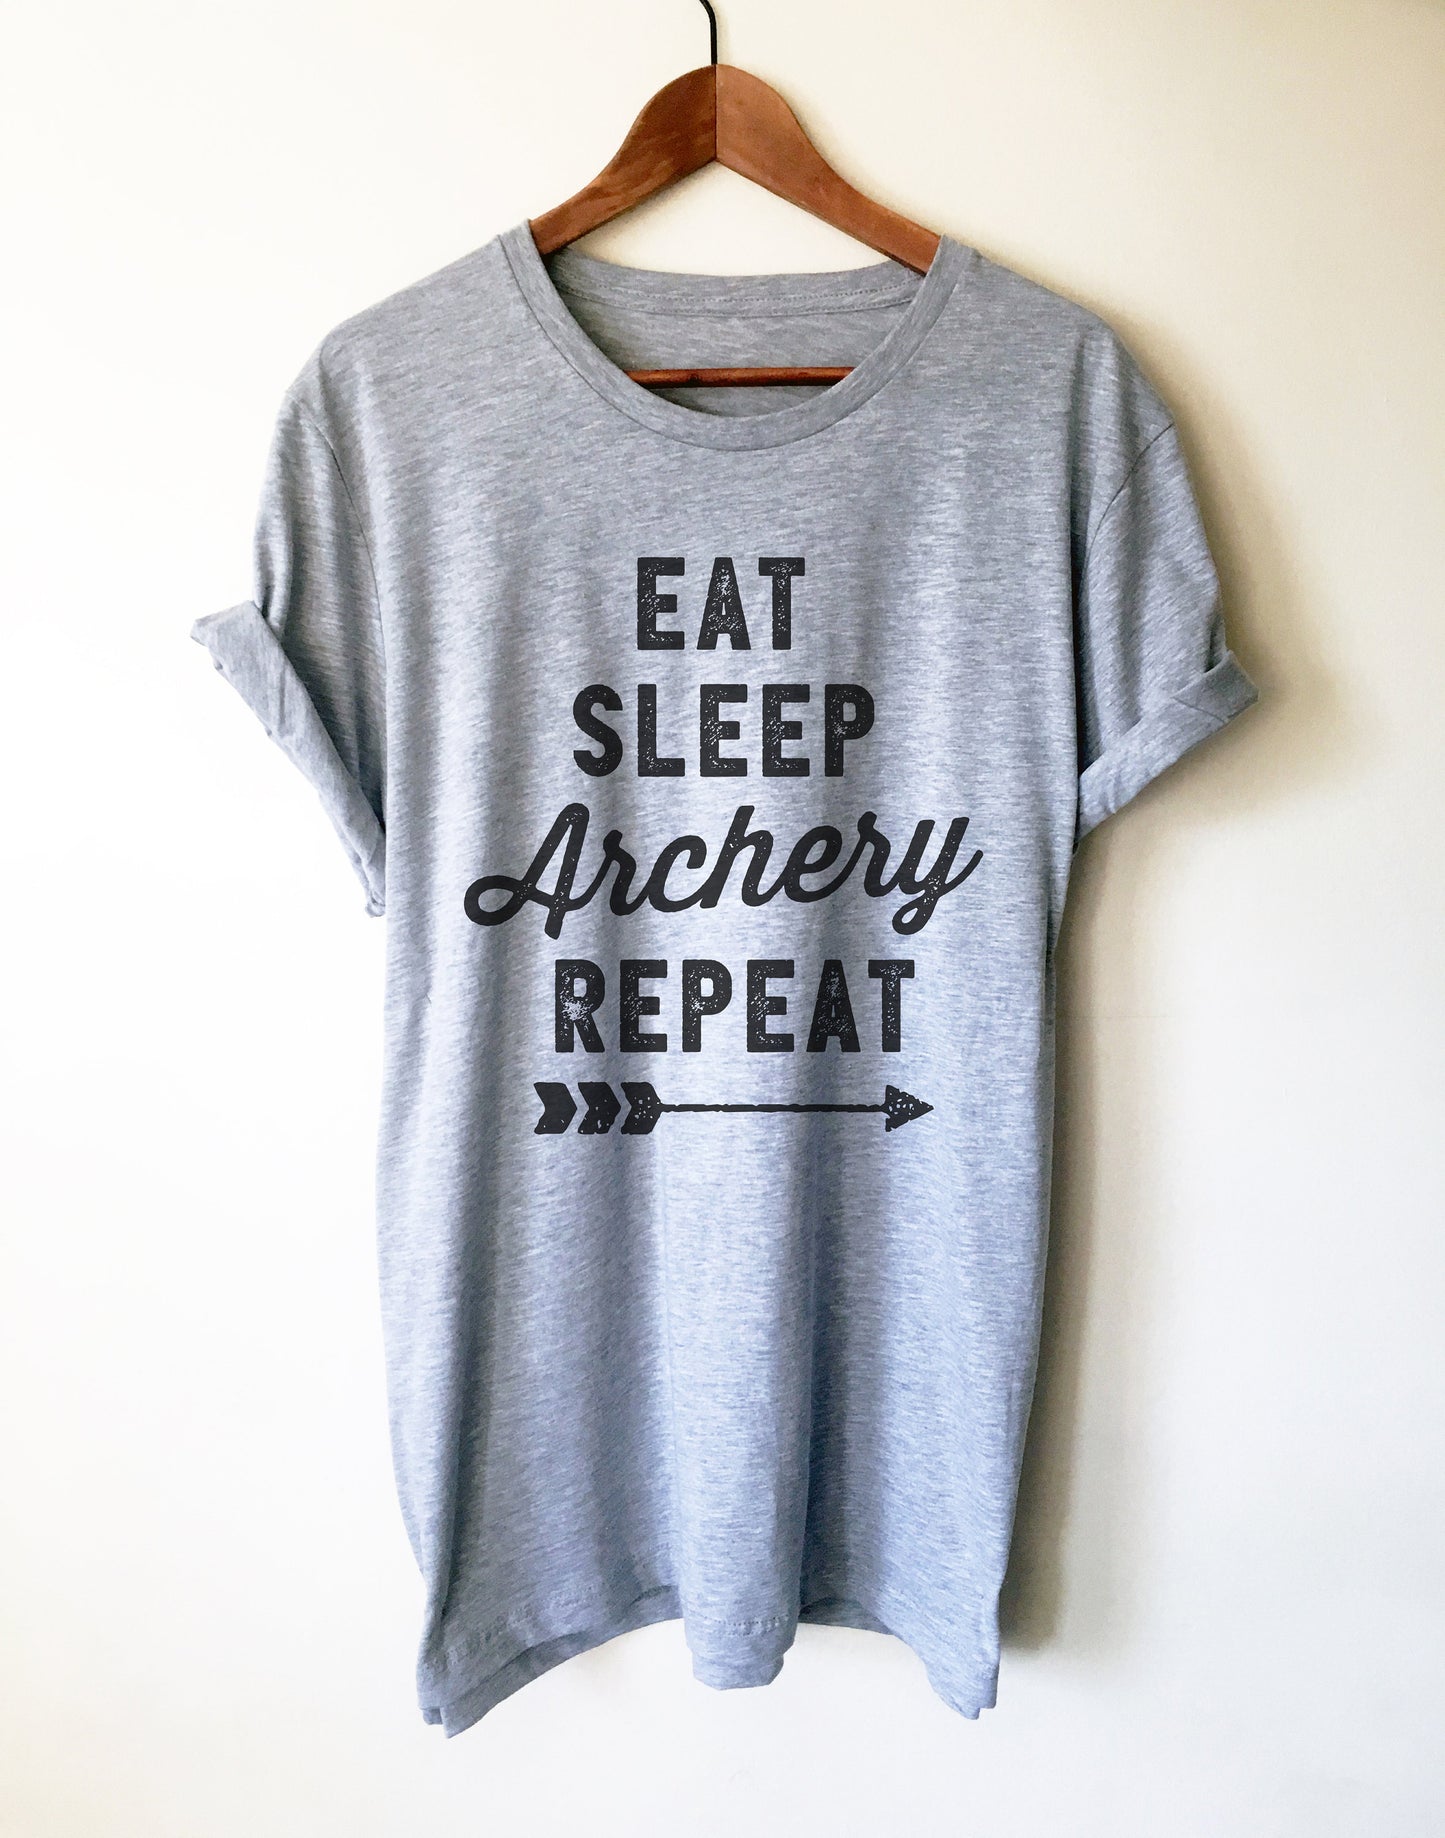 Eat Sleep Archery Repeat Unisex Shirt - Archery Shirt, Archery, Archer, Archery Gift, Archery Bow, Archer Shirt, Archery Target